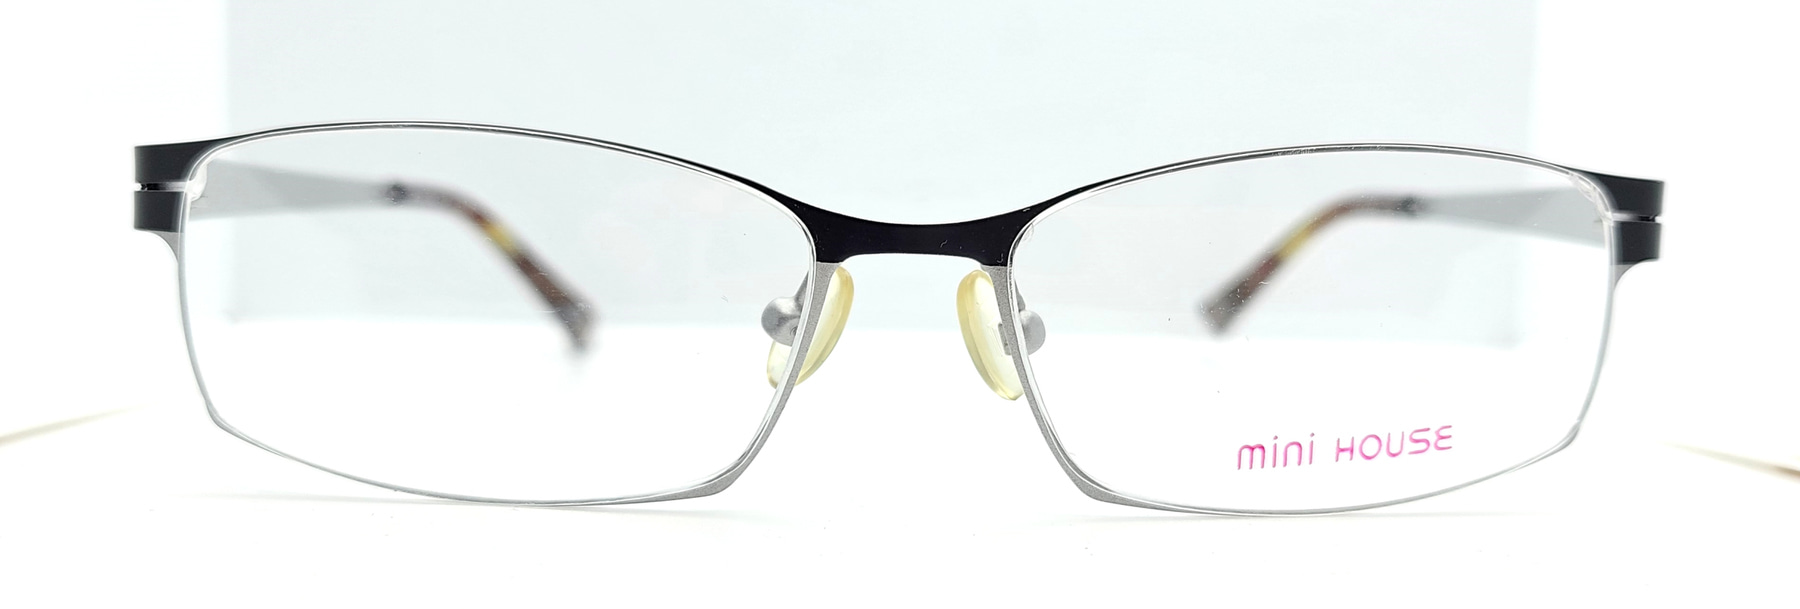 MINIHOUSE M-09, Korean glasses, sunglasses, eyeglasses, glasses